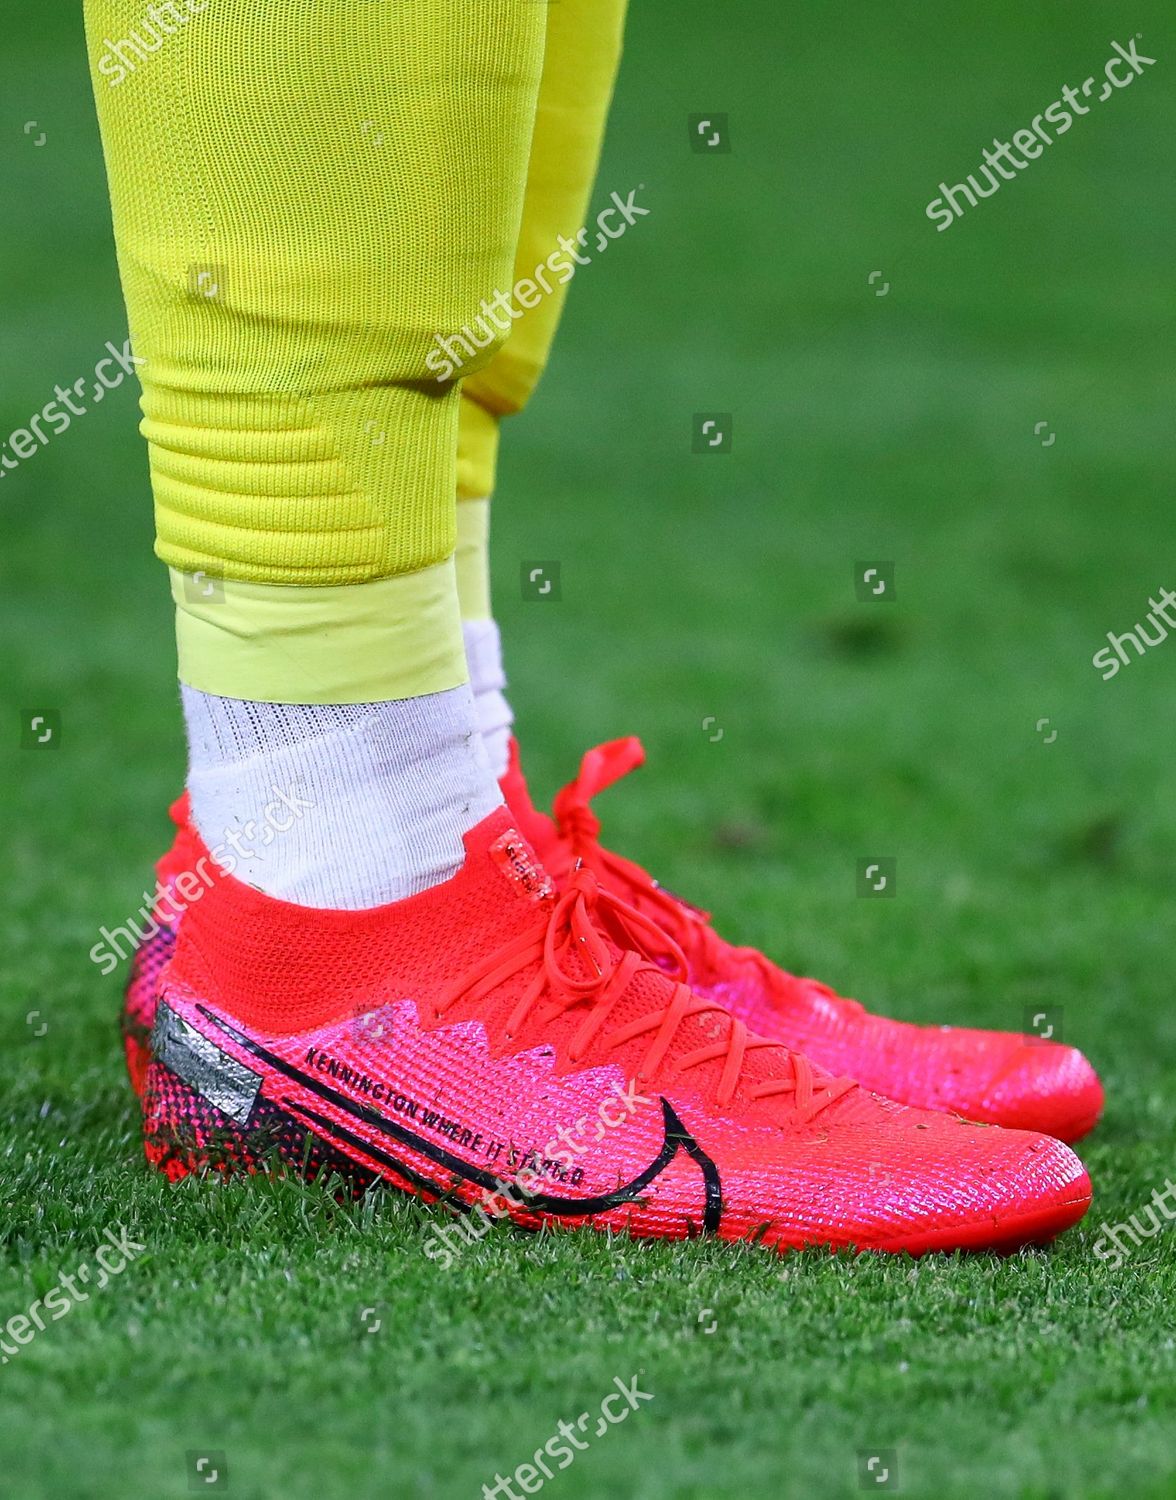 sancho football boots